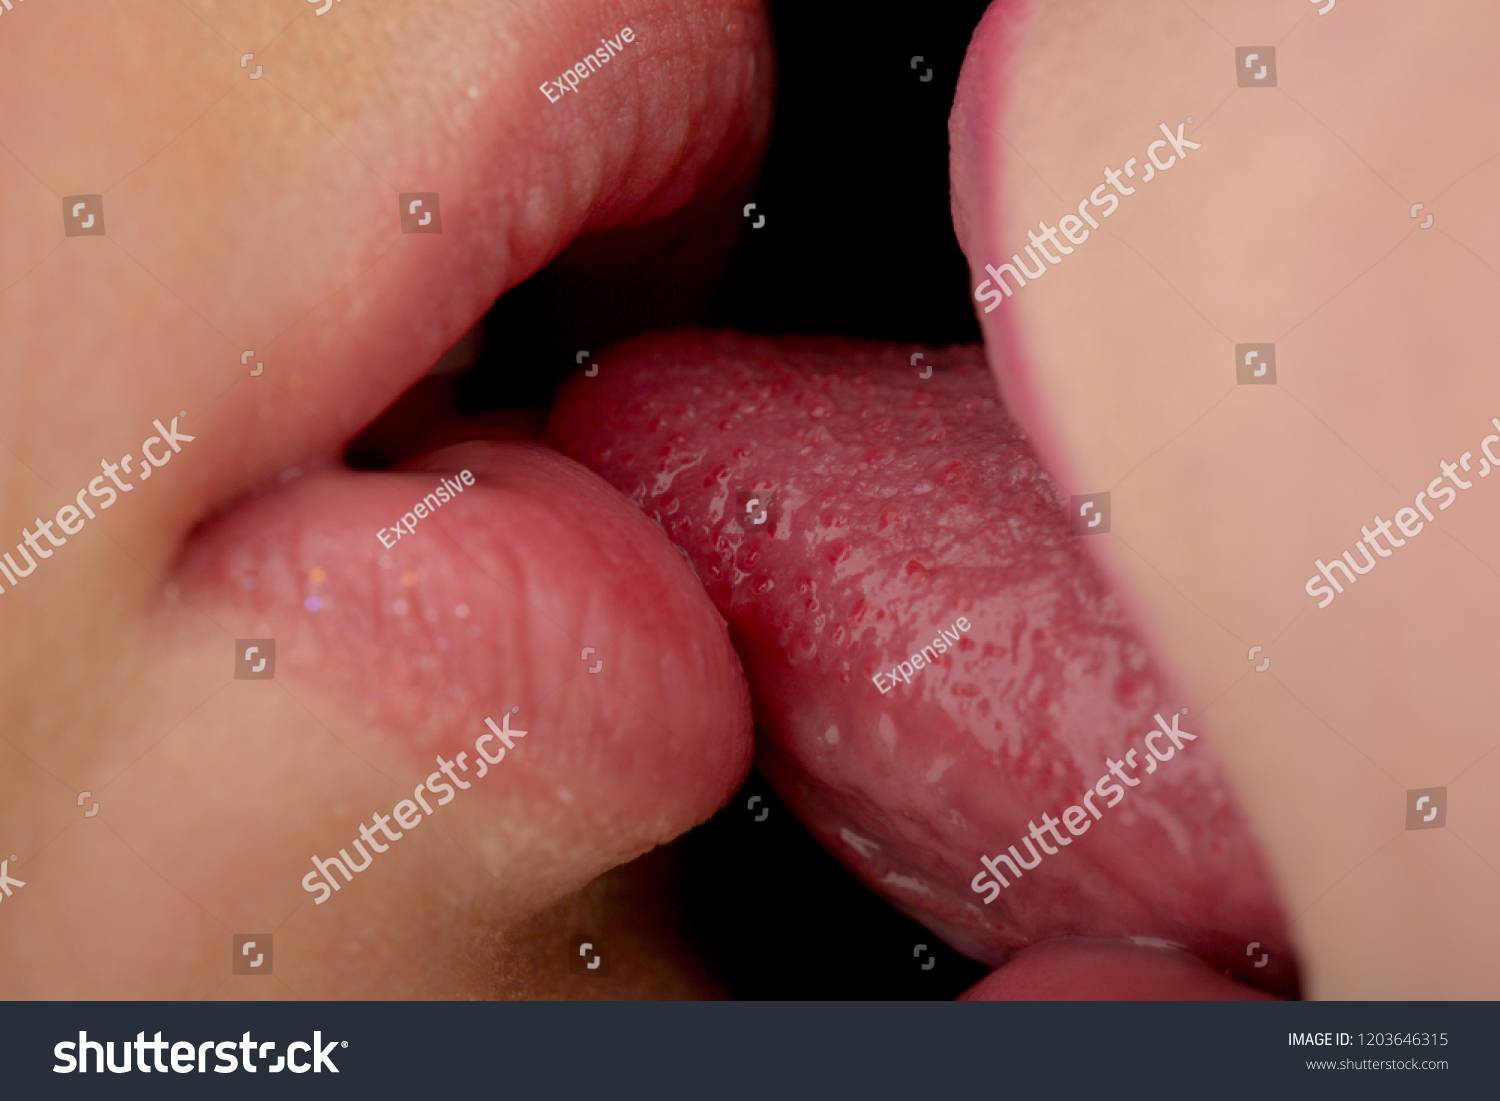 lesbians wet tongue kissing